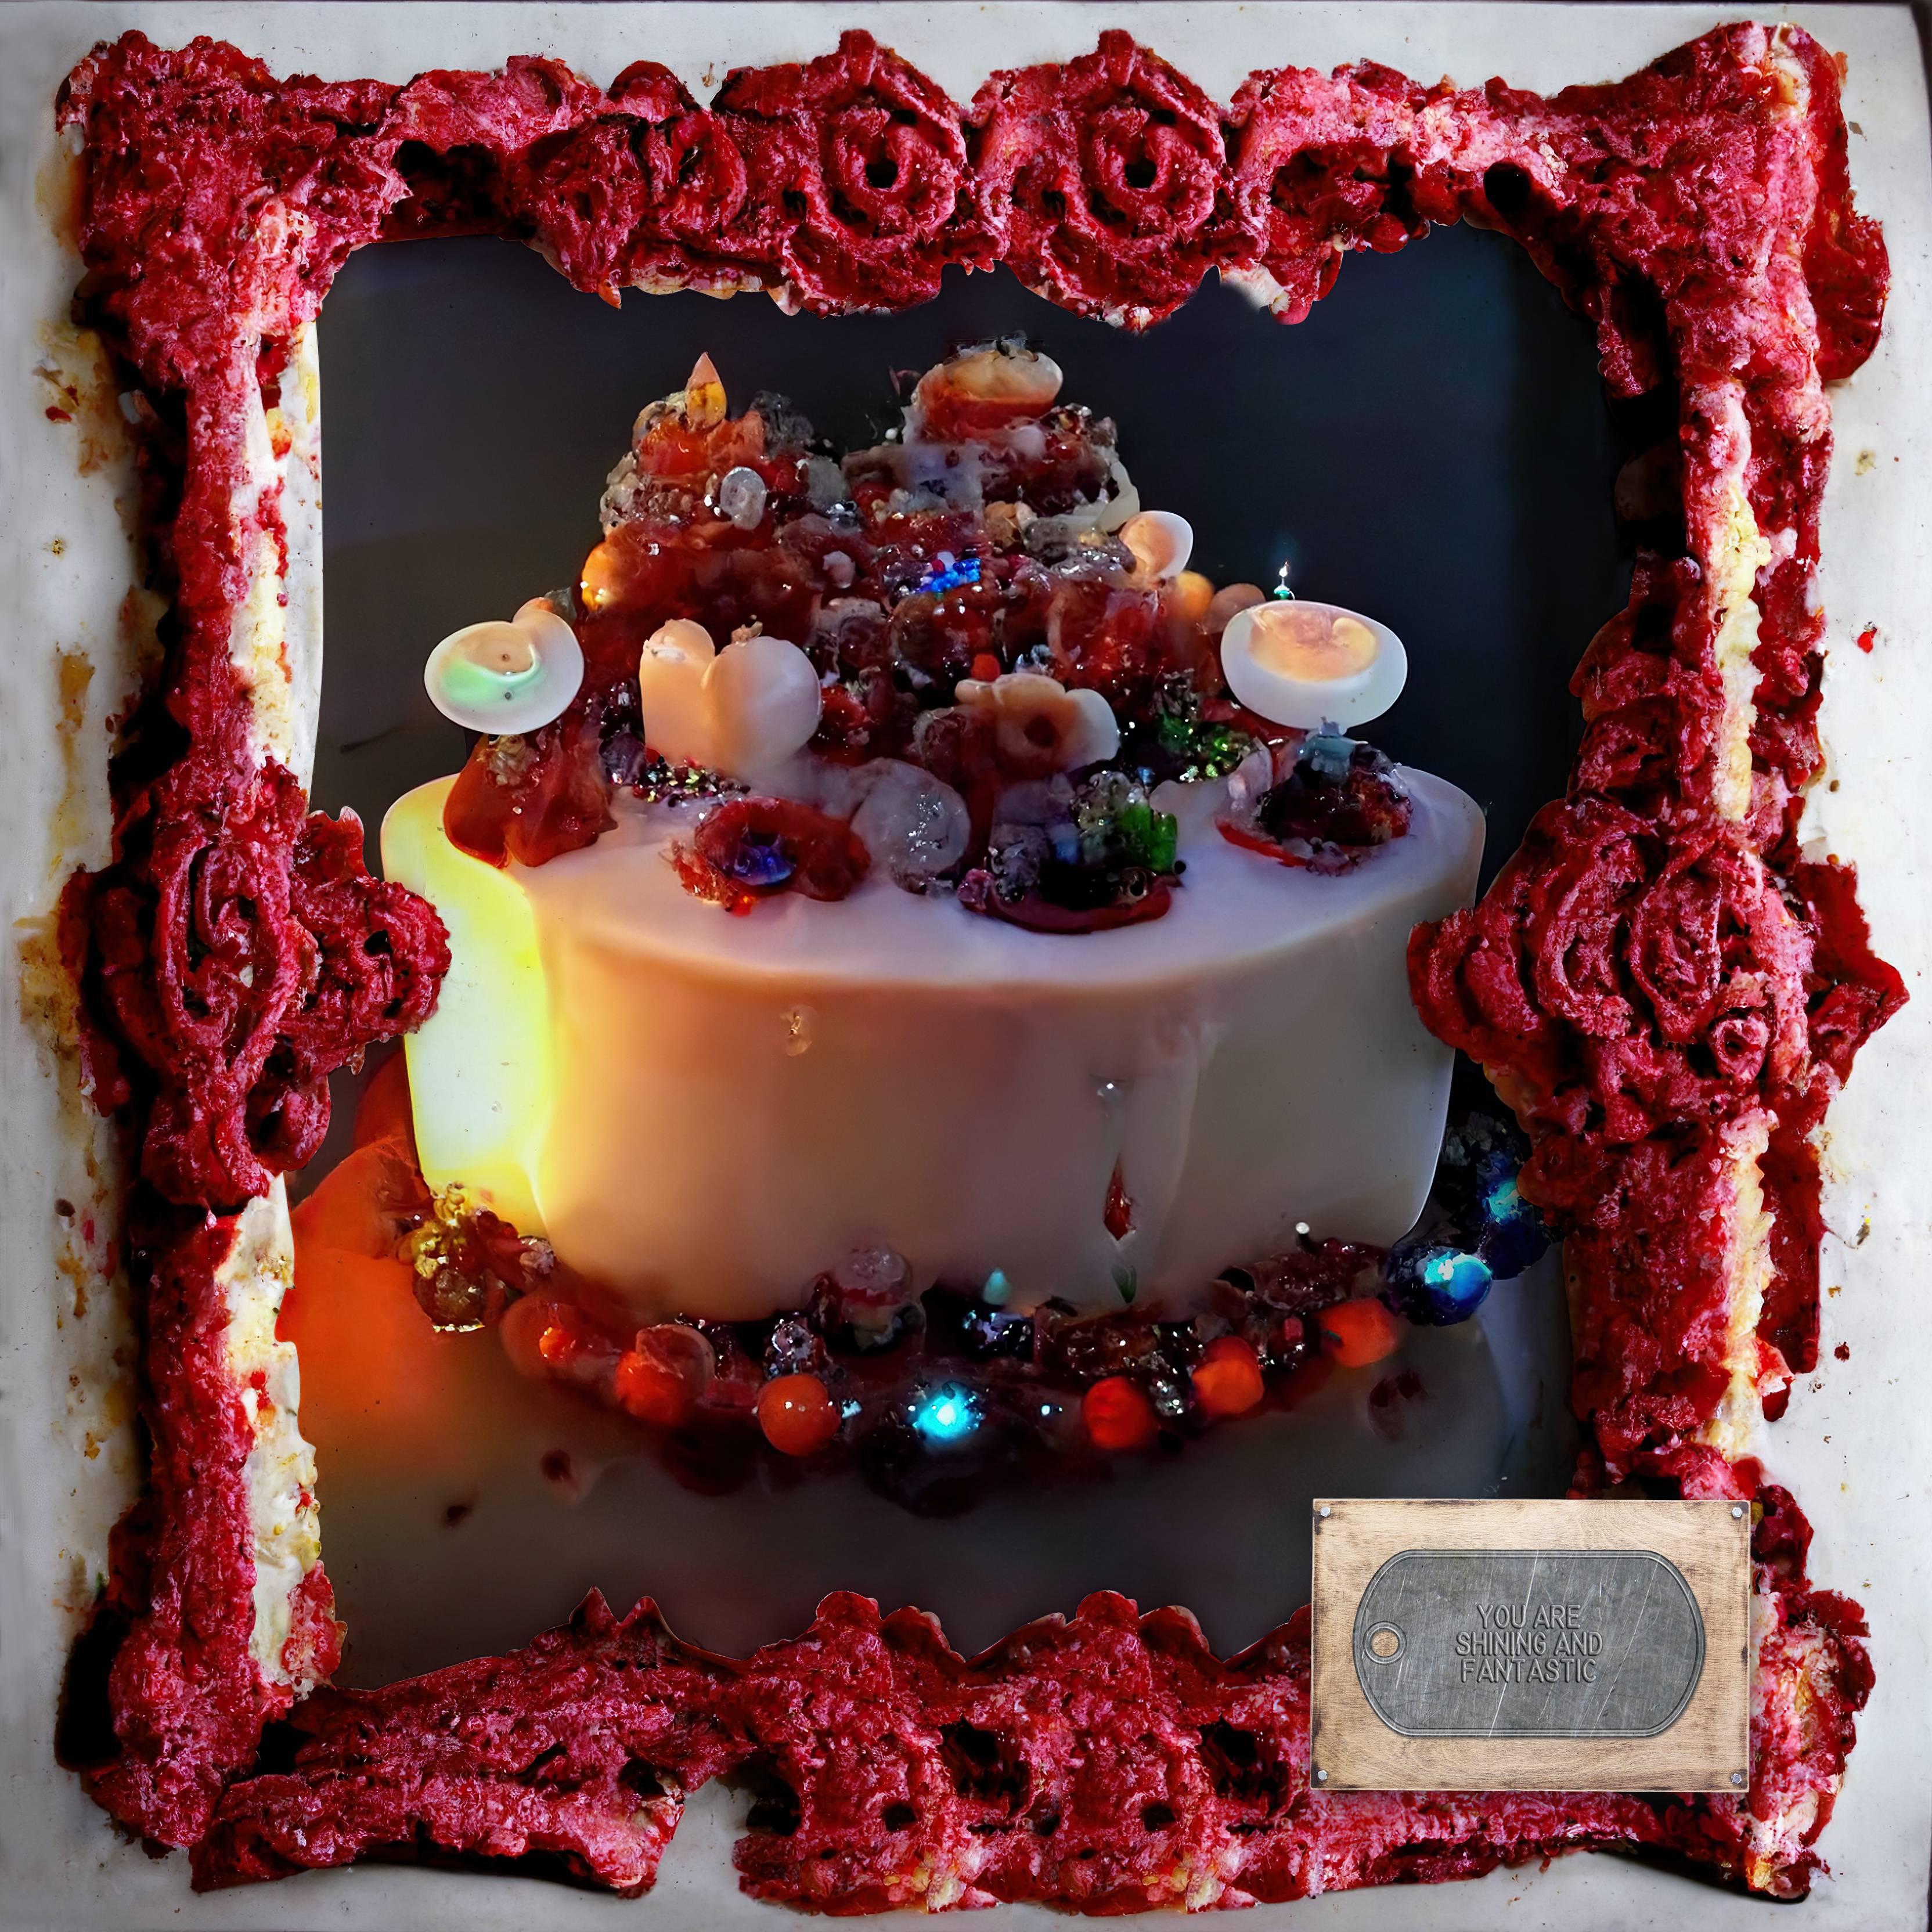 Shining And Fantastic Red Velvet Pearl Fermented Pollock Roe Cake